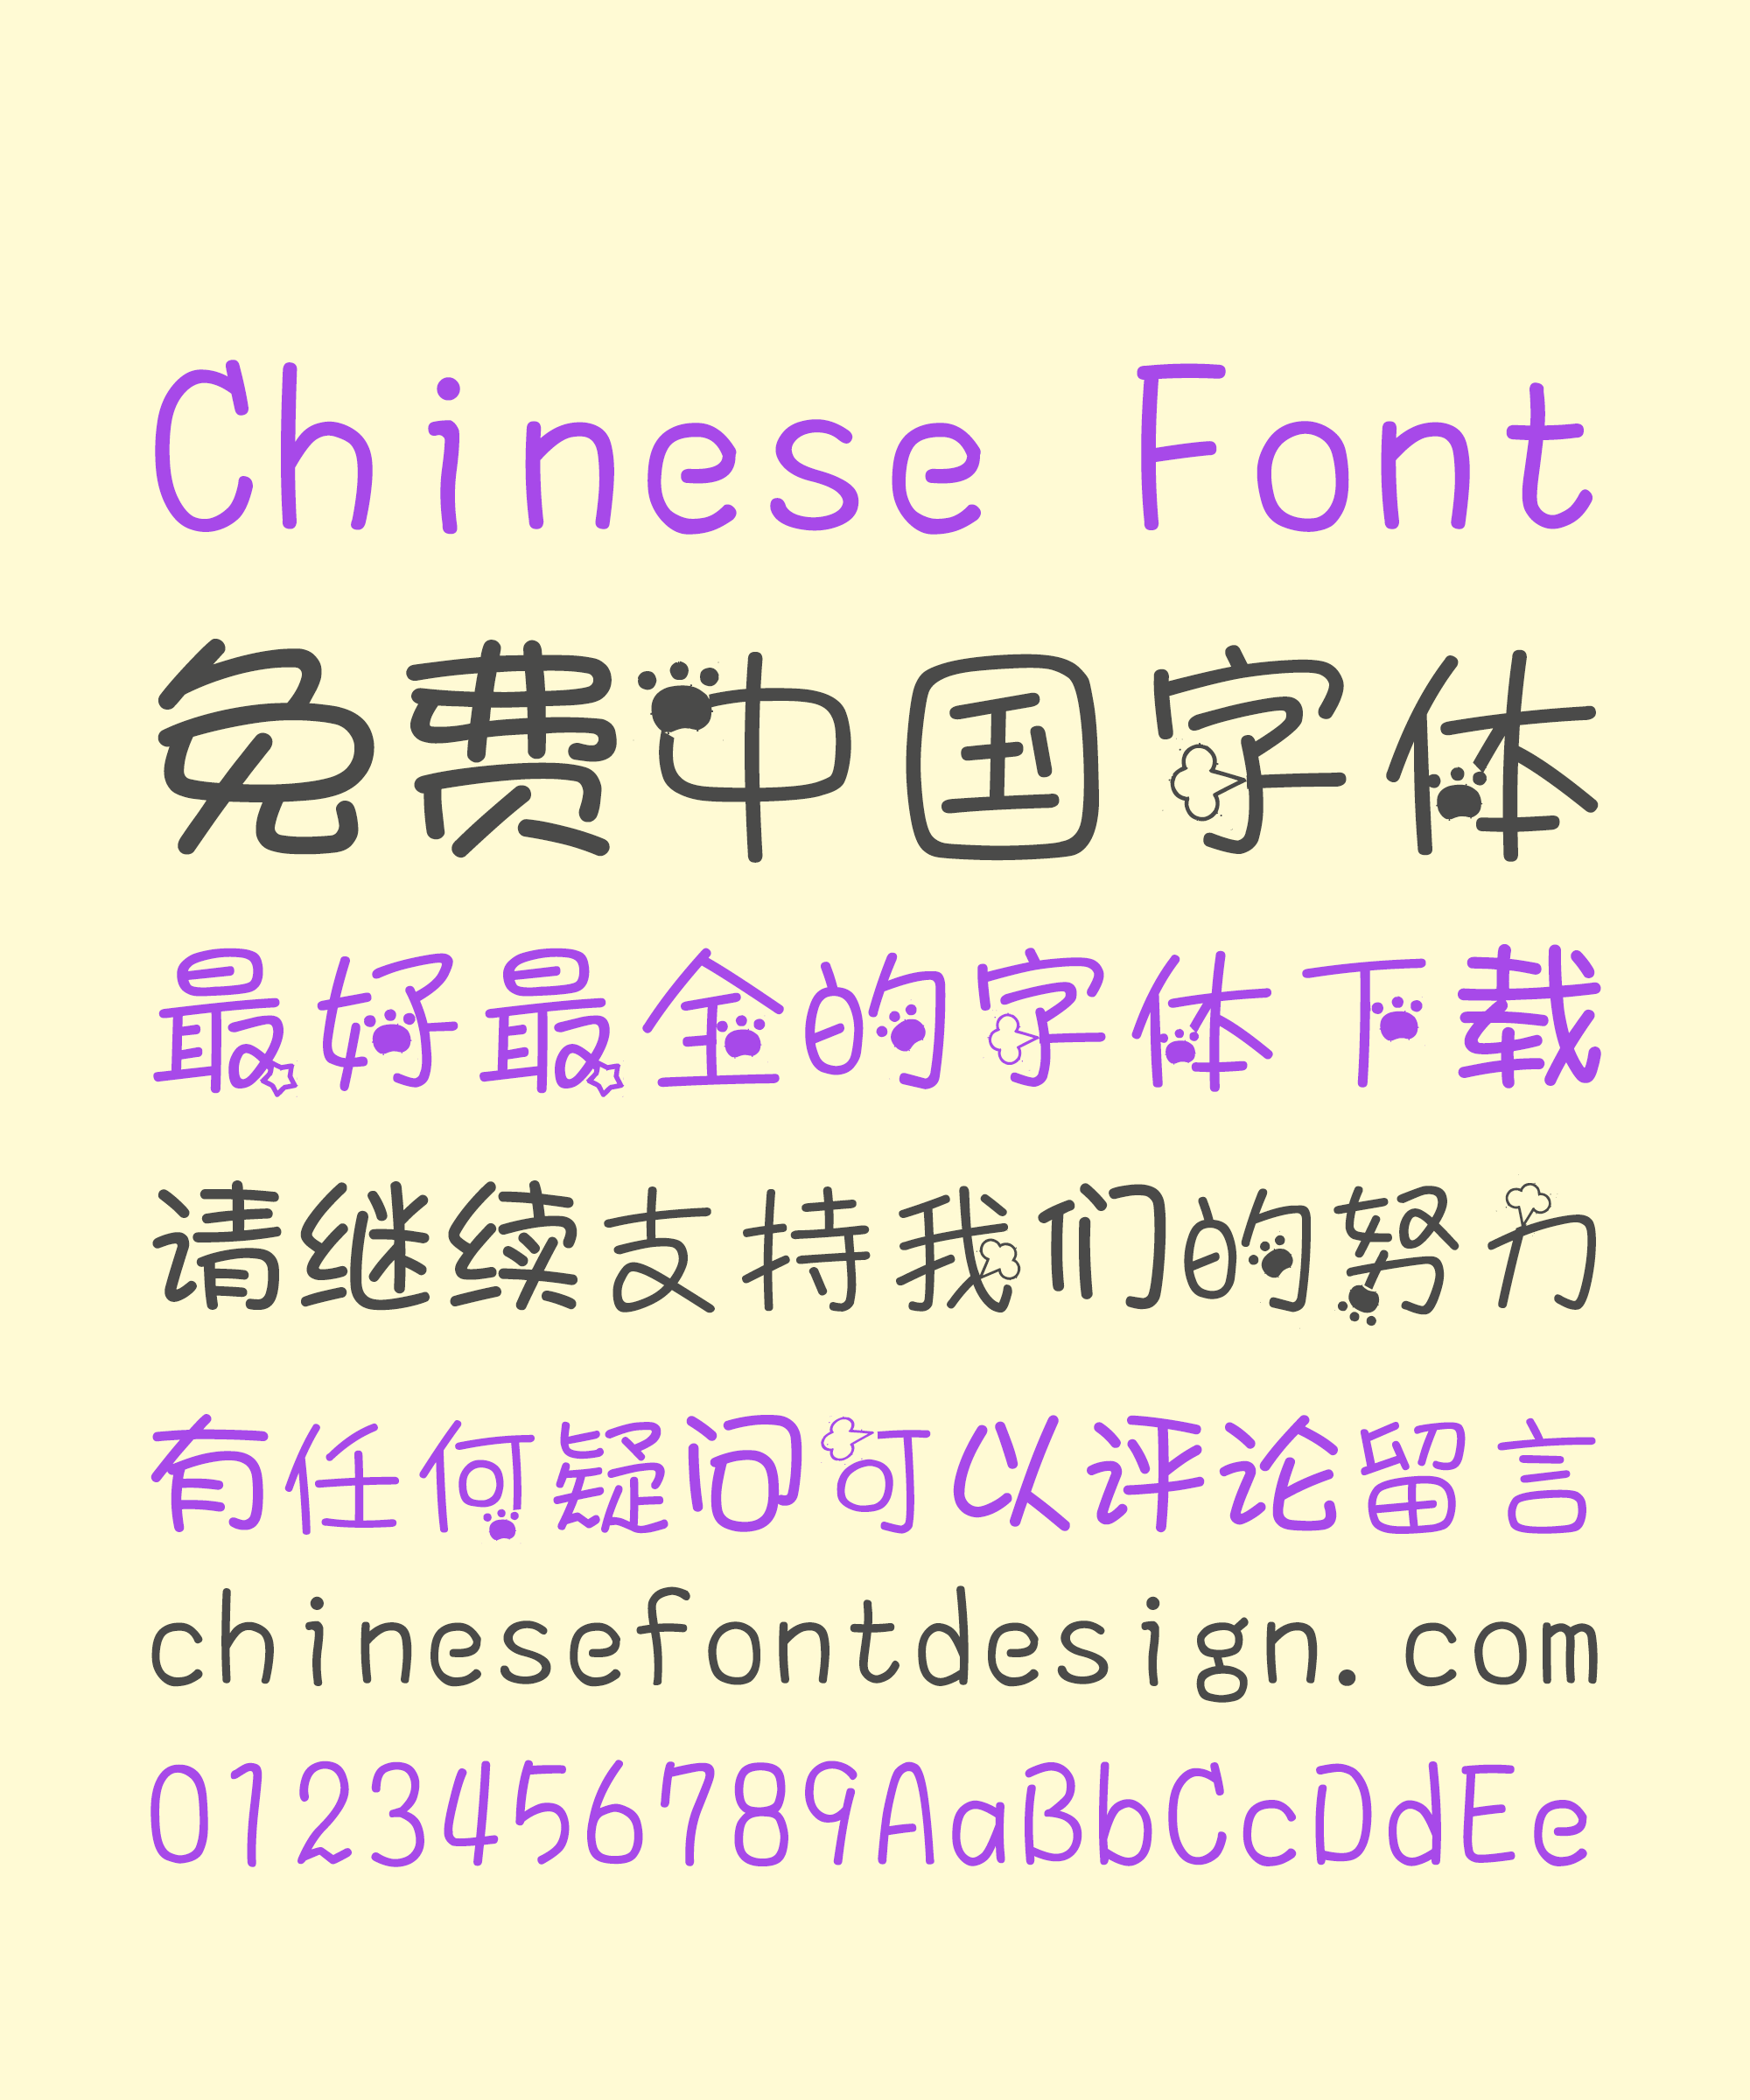 chinese font free